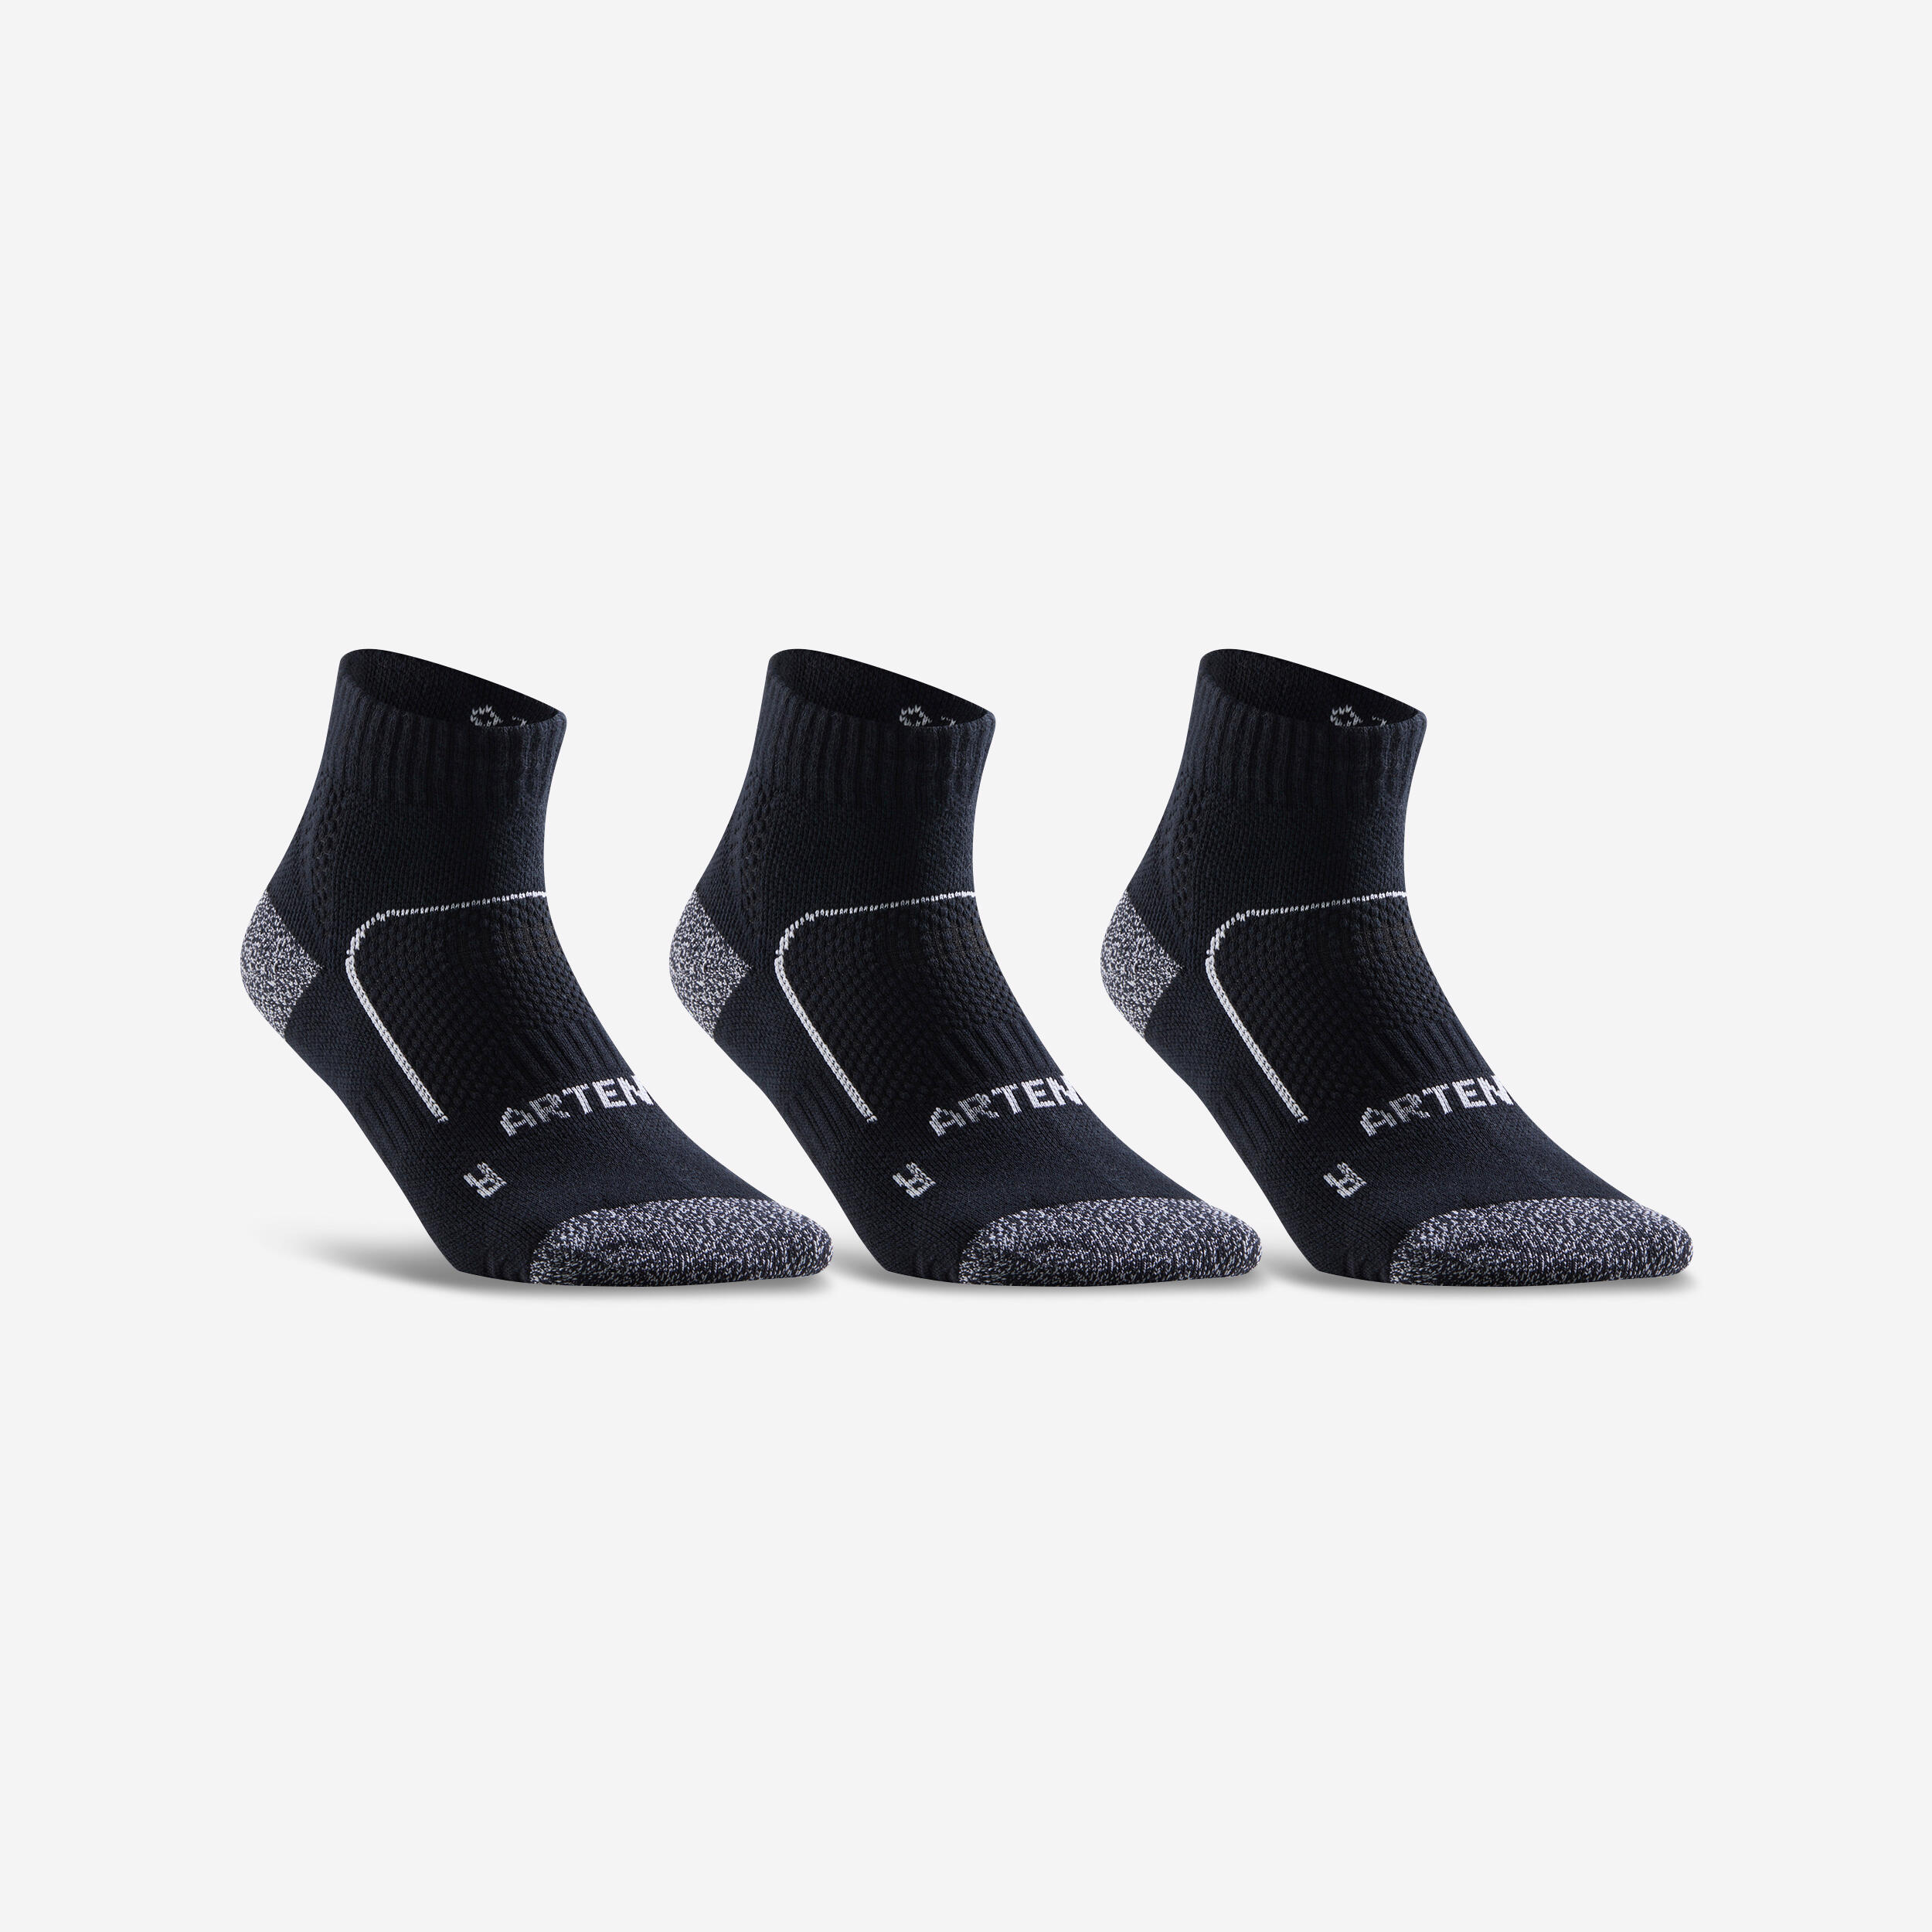 ARTENGO RS 900 Mid Sports Socks Tri-Pack - Black/White